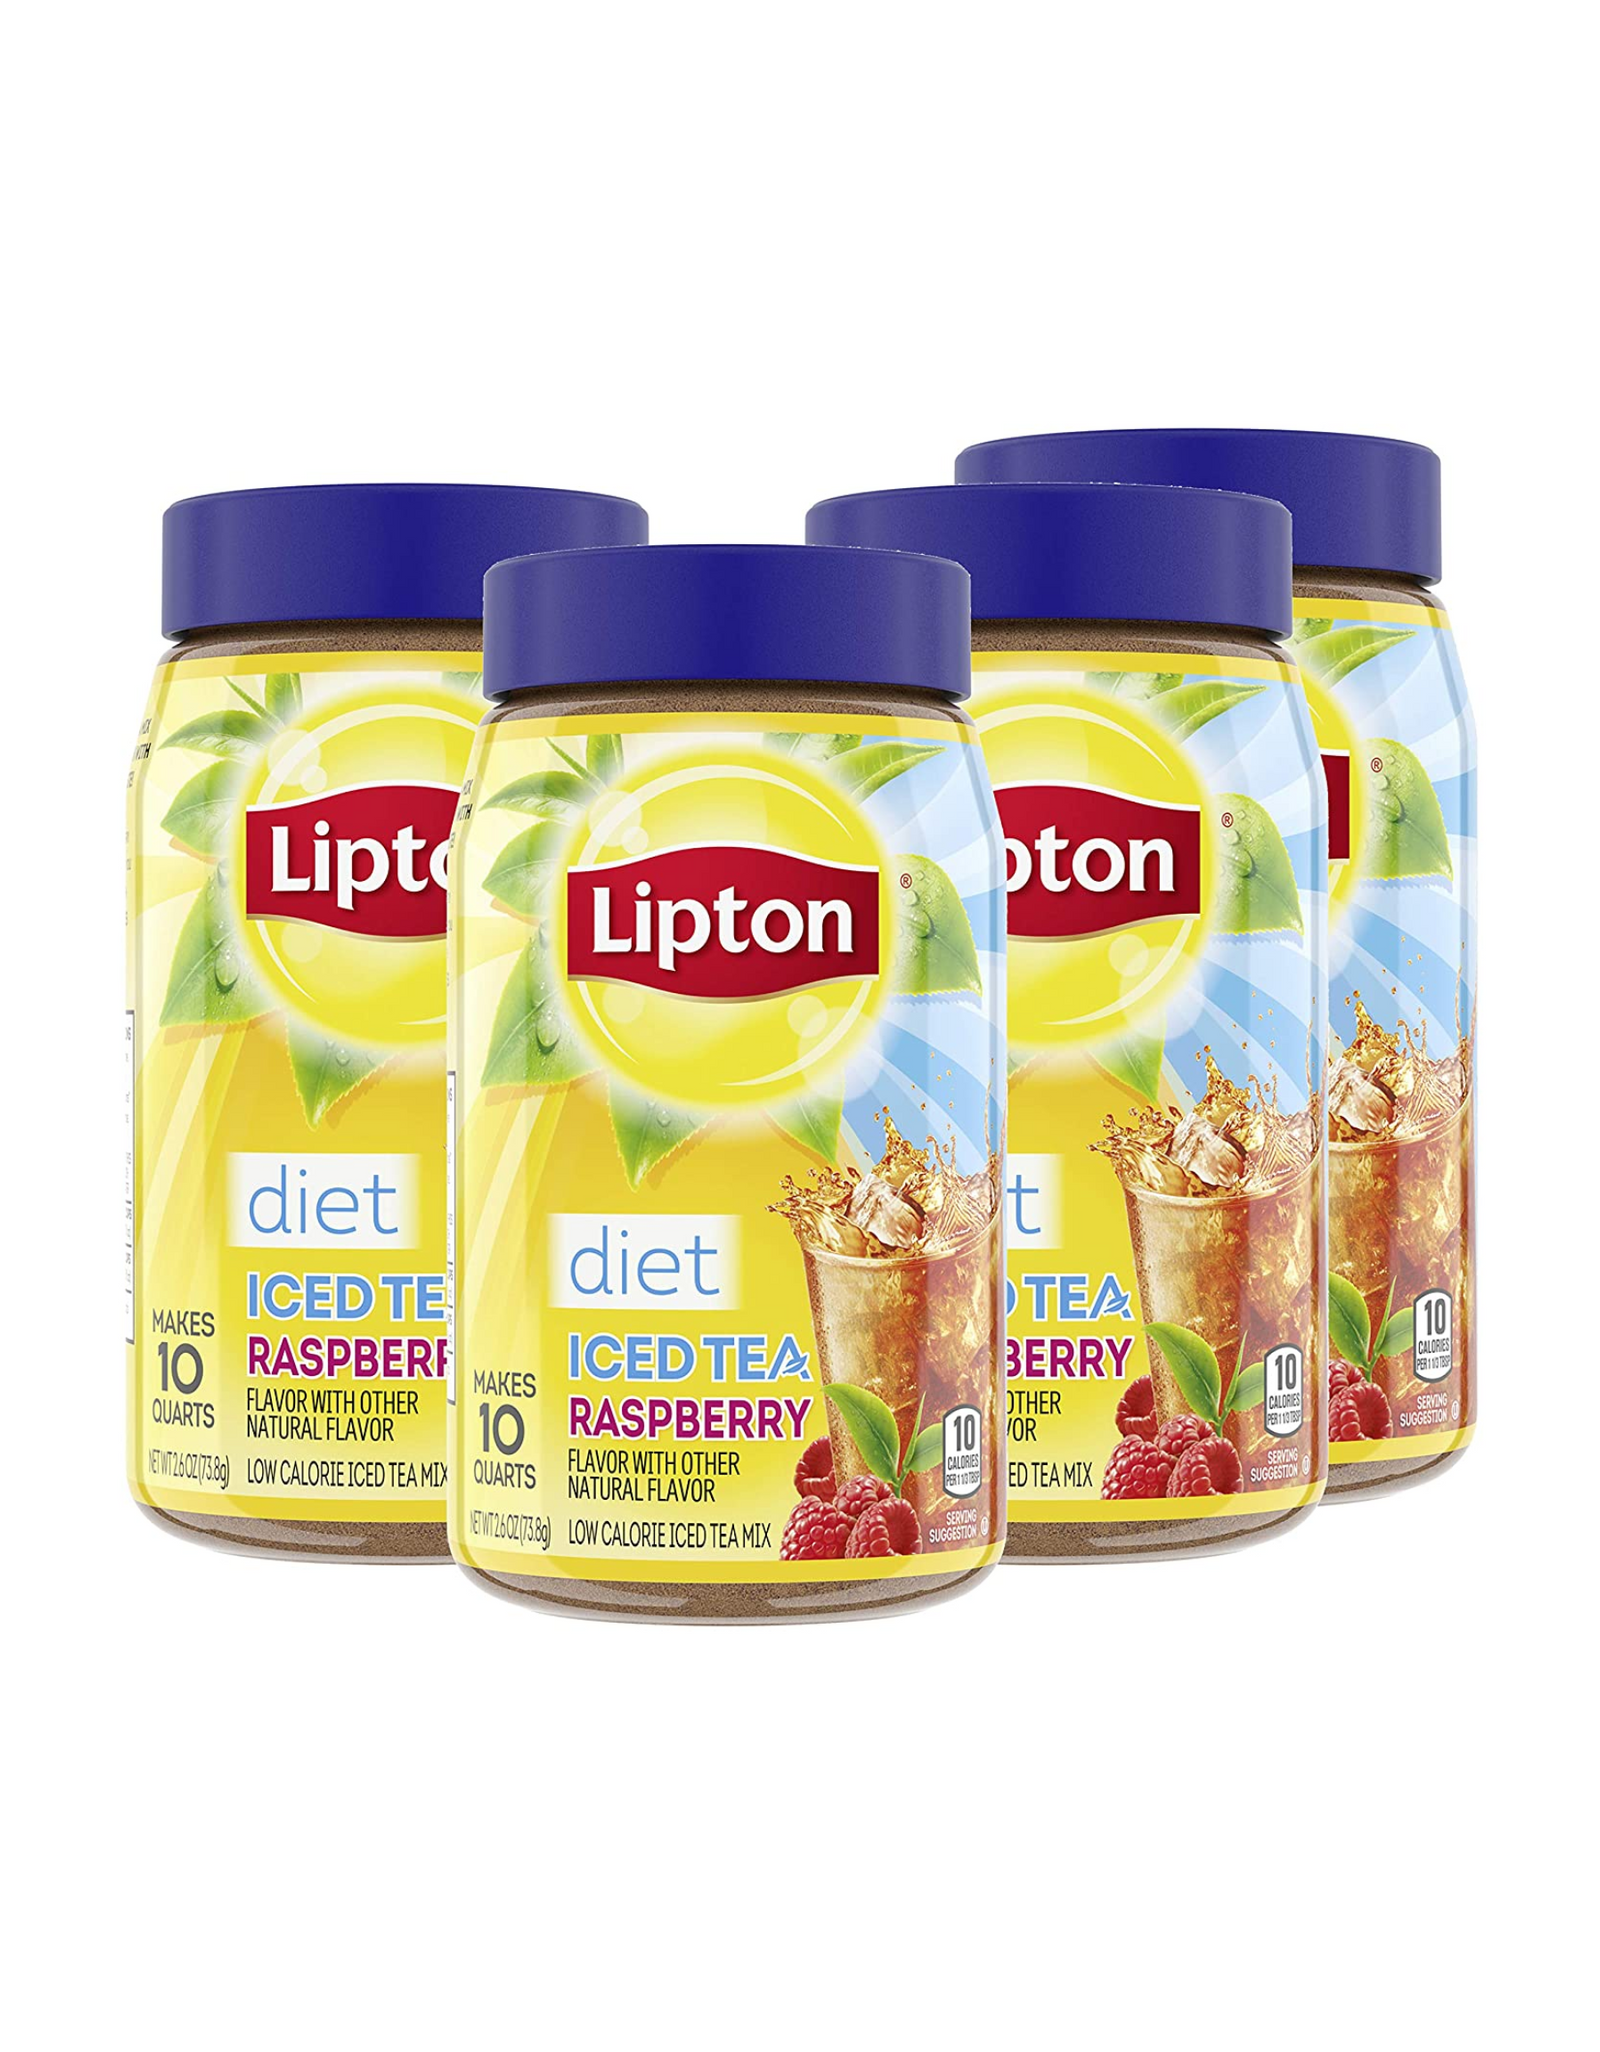 Lipton Diet Iced Tea Mix, Raspberry, Makes 10 Quarts (Pack of 4)